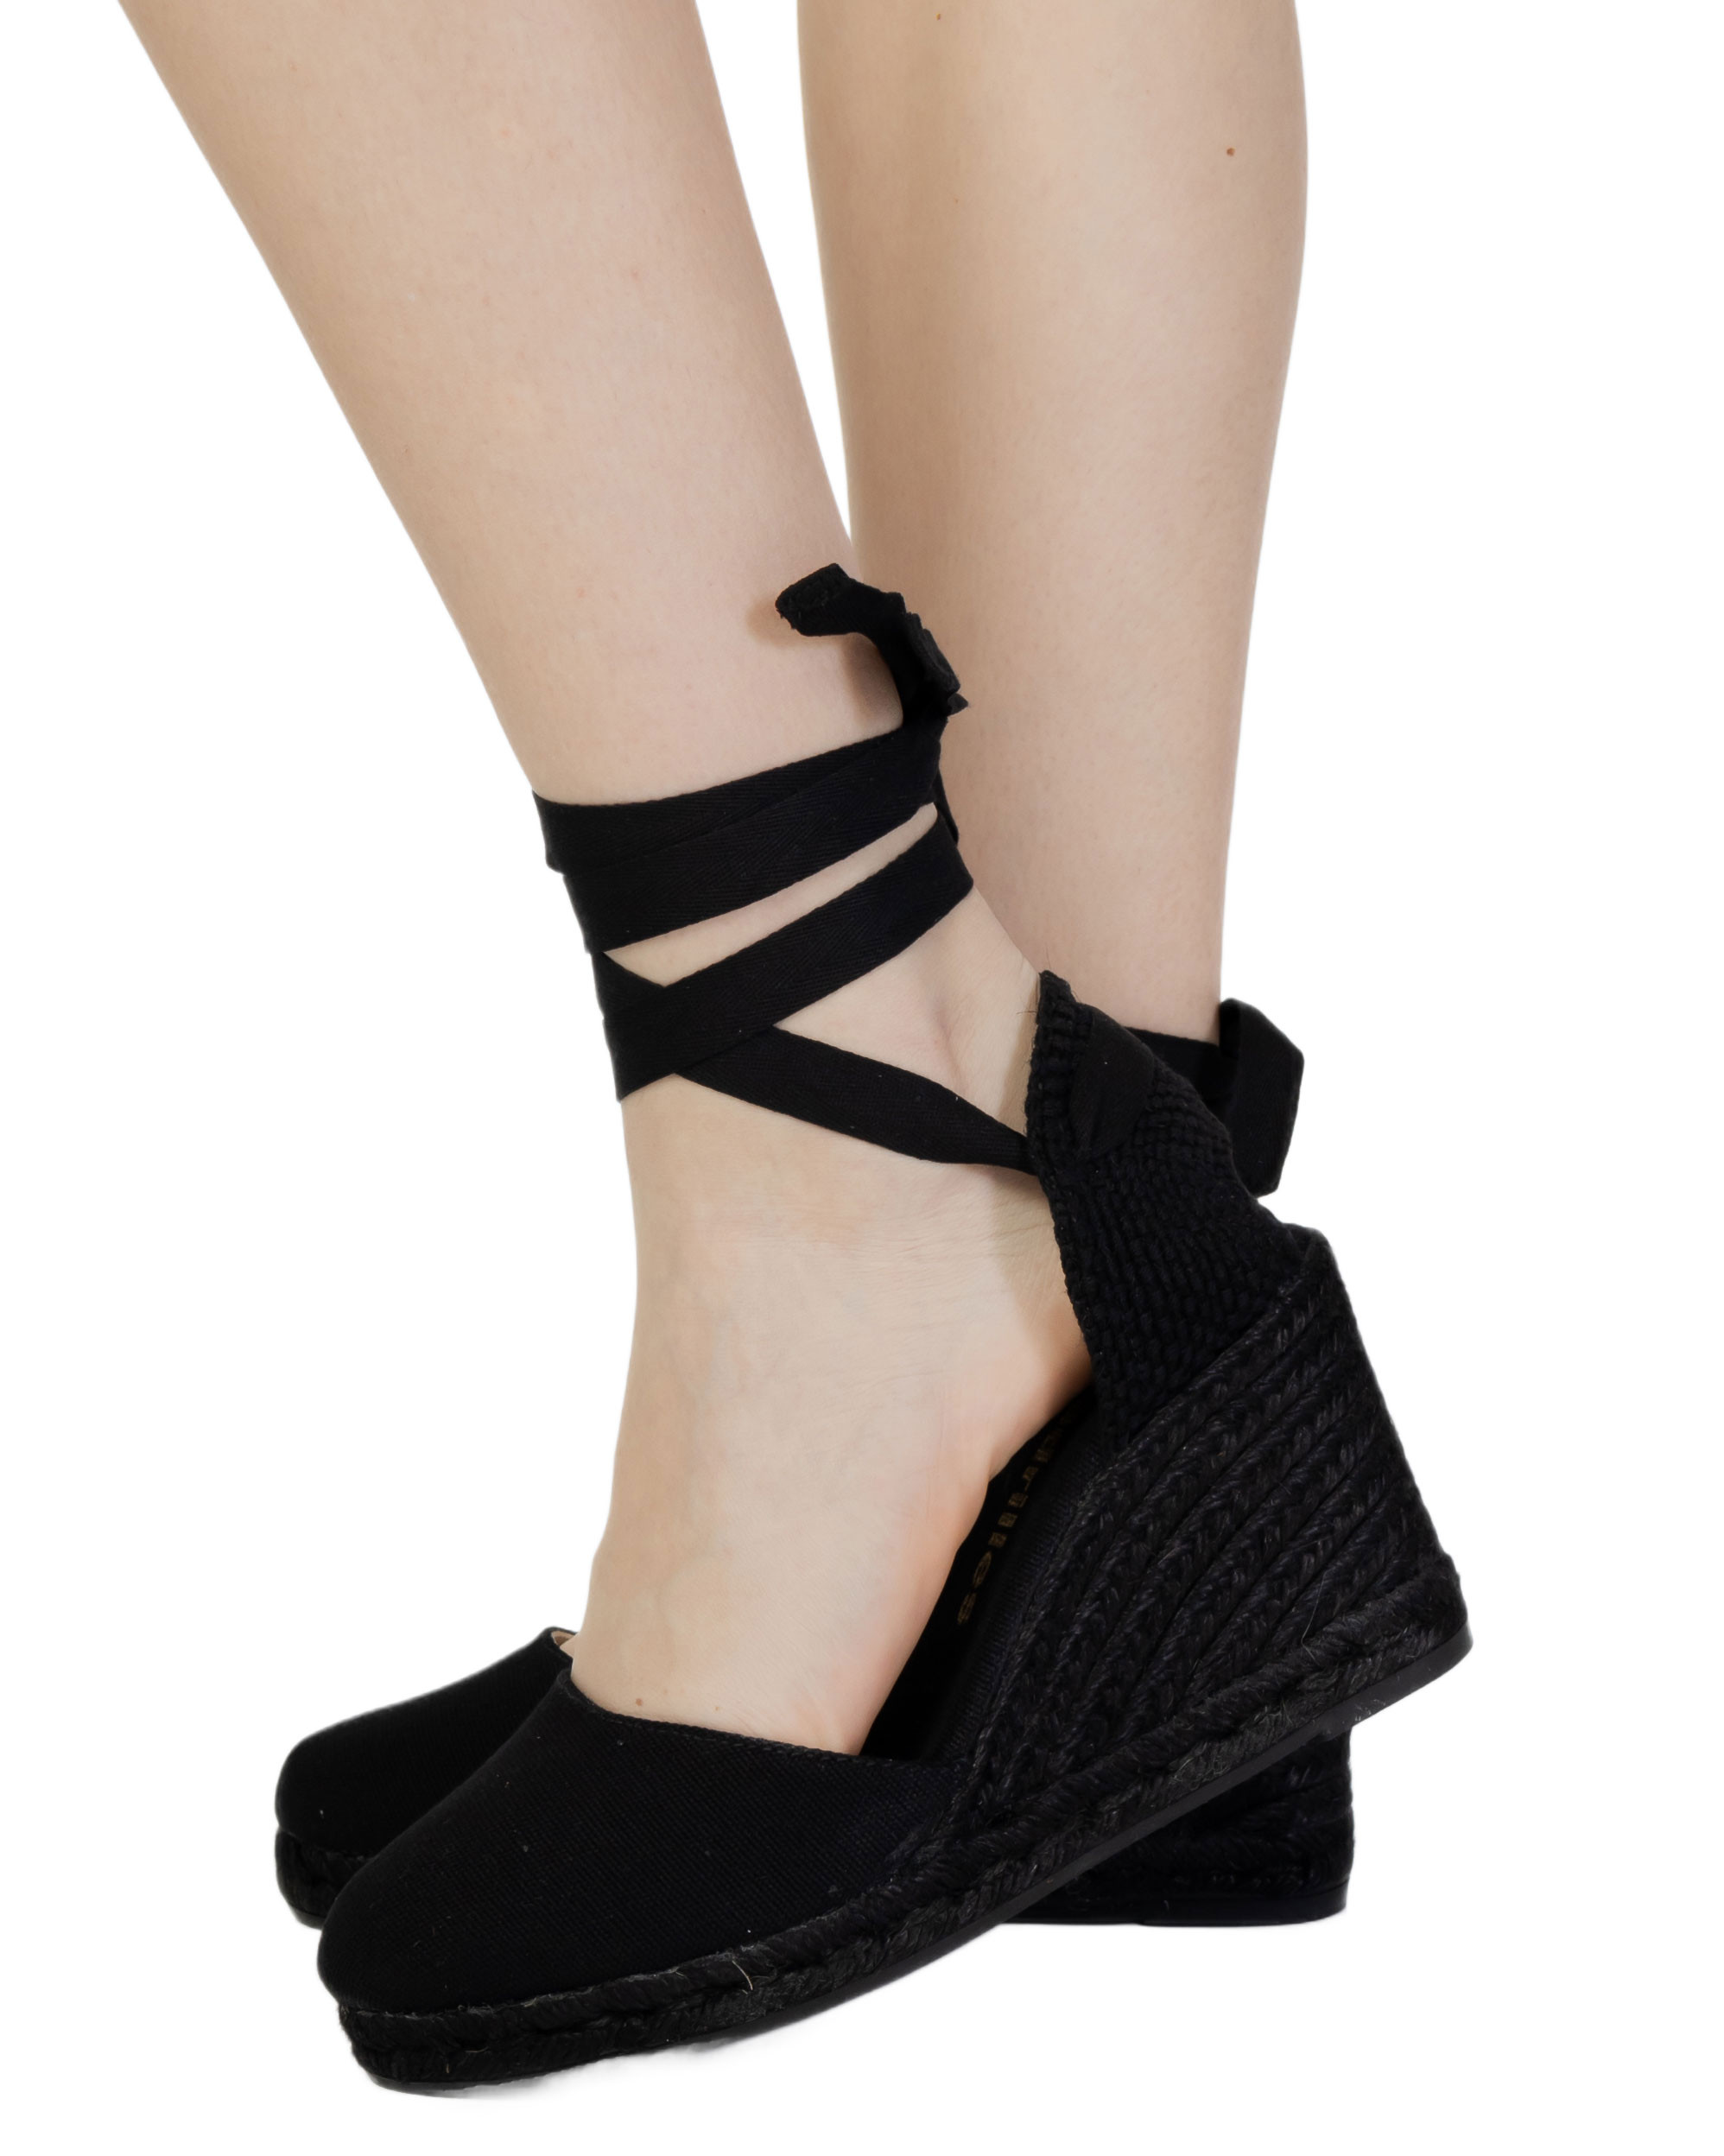 schuhe damen ESPADRILLES sandalen schwarz textil GR69621 - ZOOODE.COM